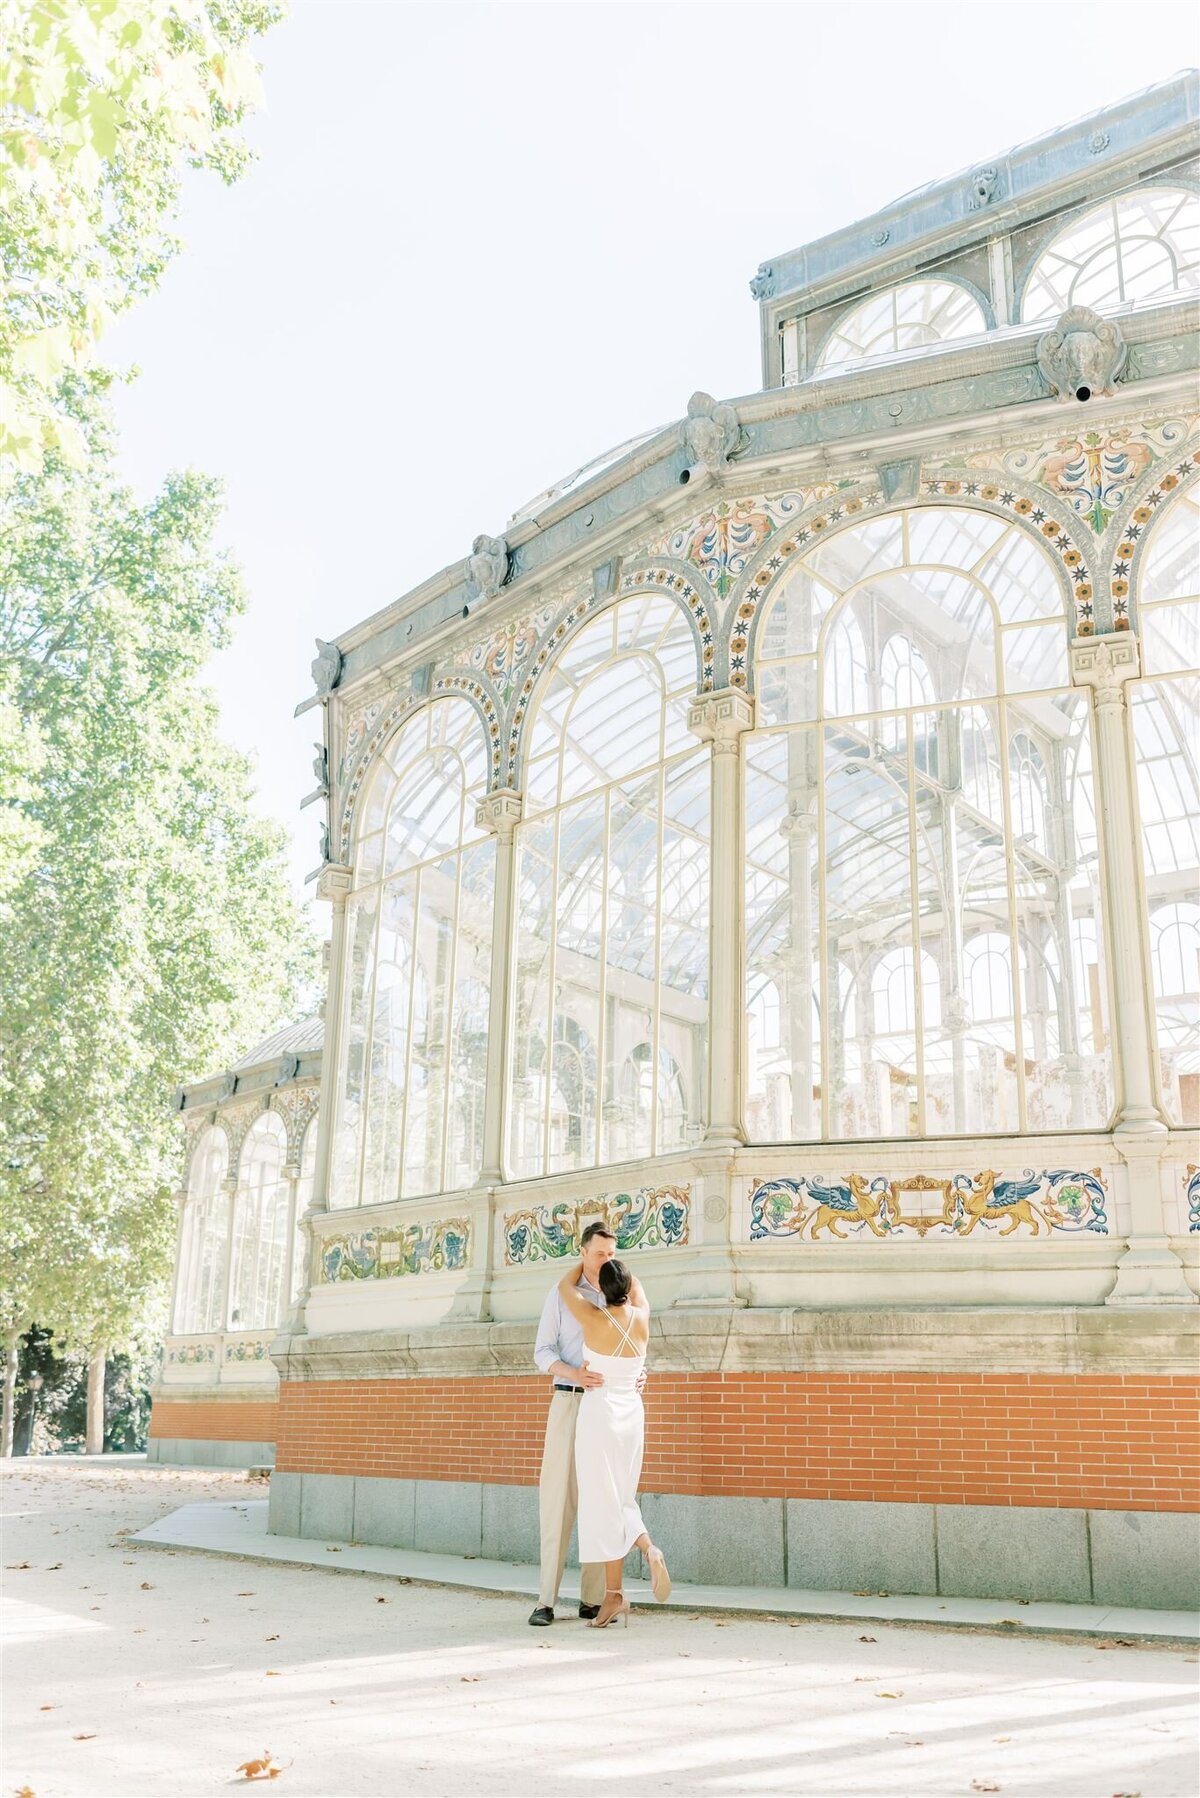 Wedding Photographer in Stockholm helloalora Anna Lundgren wedding in Palacio de Cristal El Retiro Park in Madrid